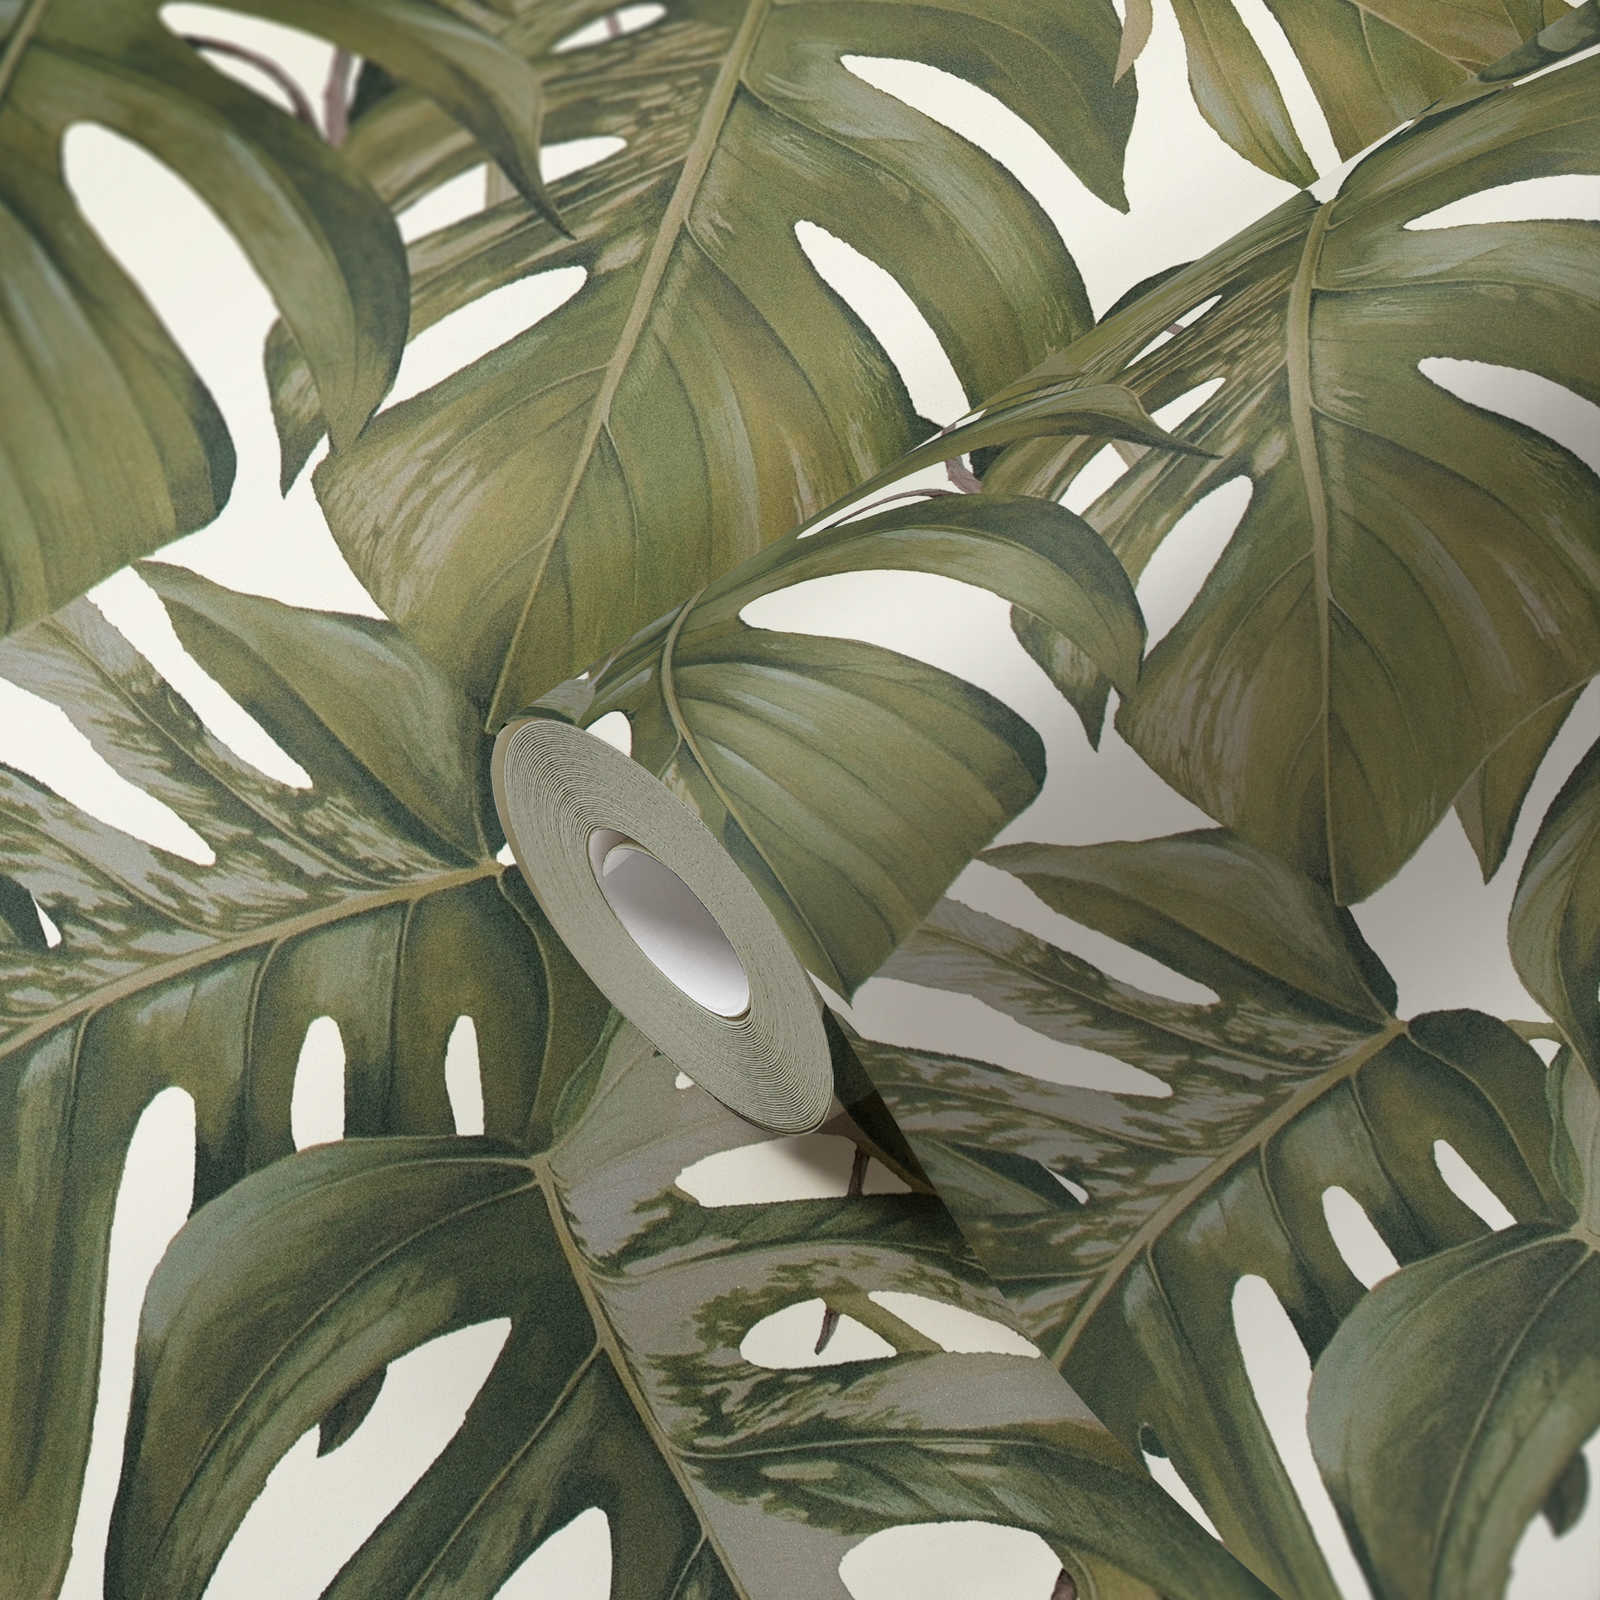             Non-woven wallpaper Monstera leaves pattern - grey, green, white
        